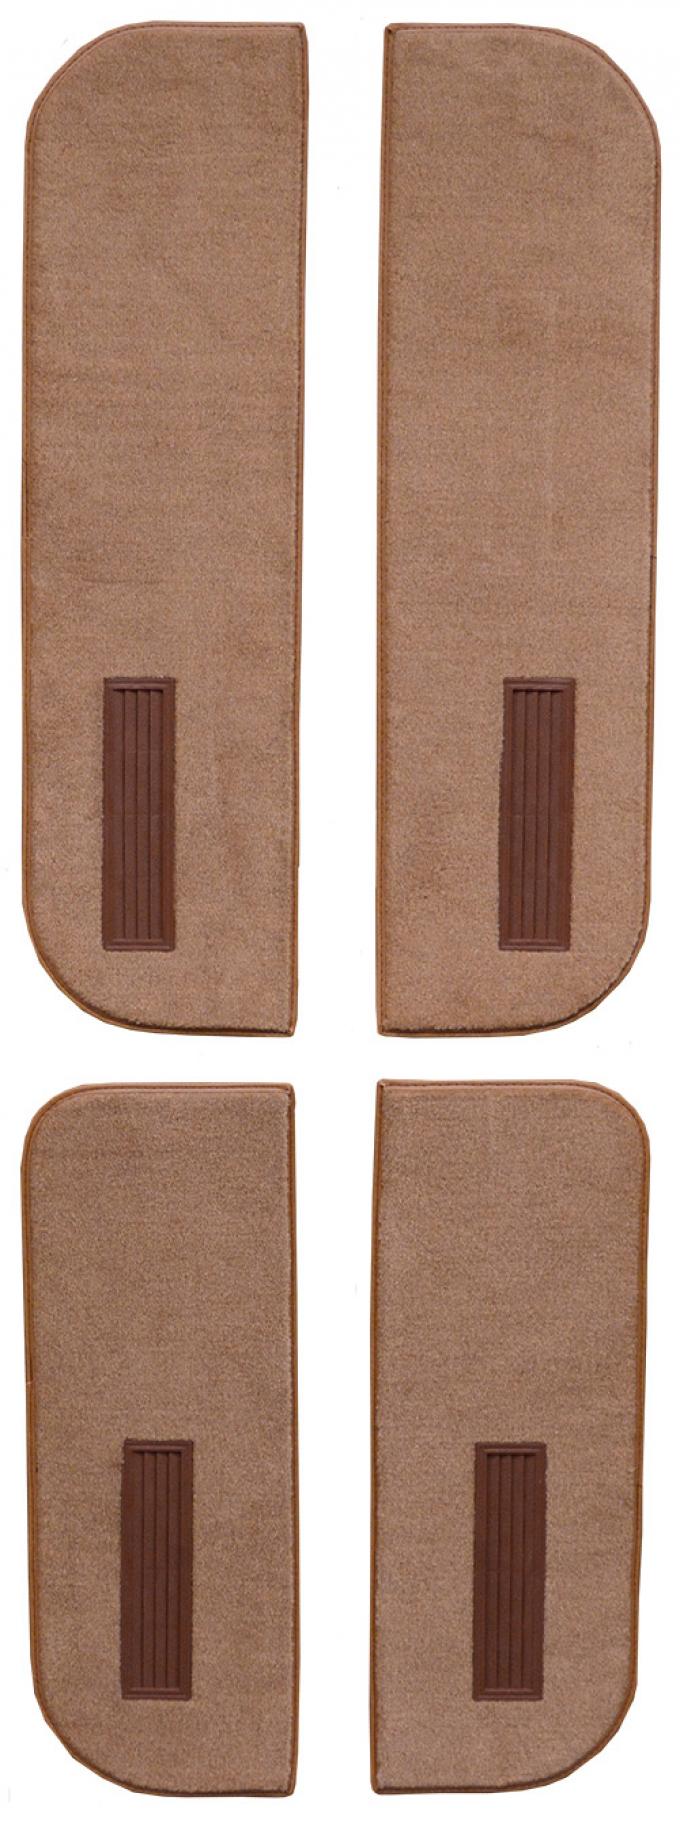 ACC 1989-1991 GMC R2500 Suburban Door Panel Inserts on Cardboard w/Vents 4pc Cutpile Carpet